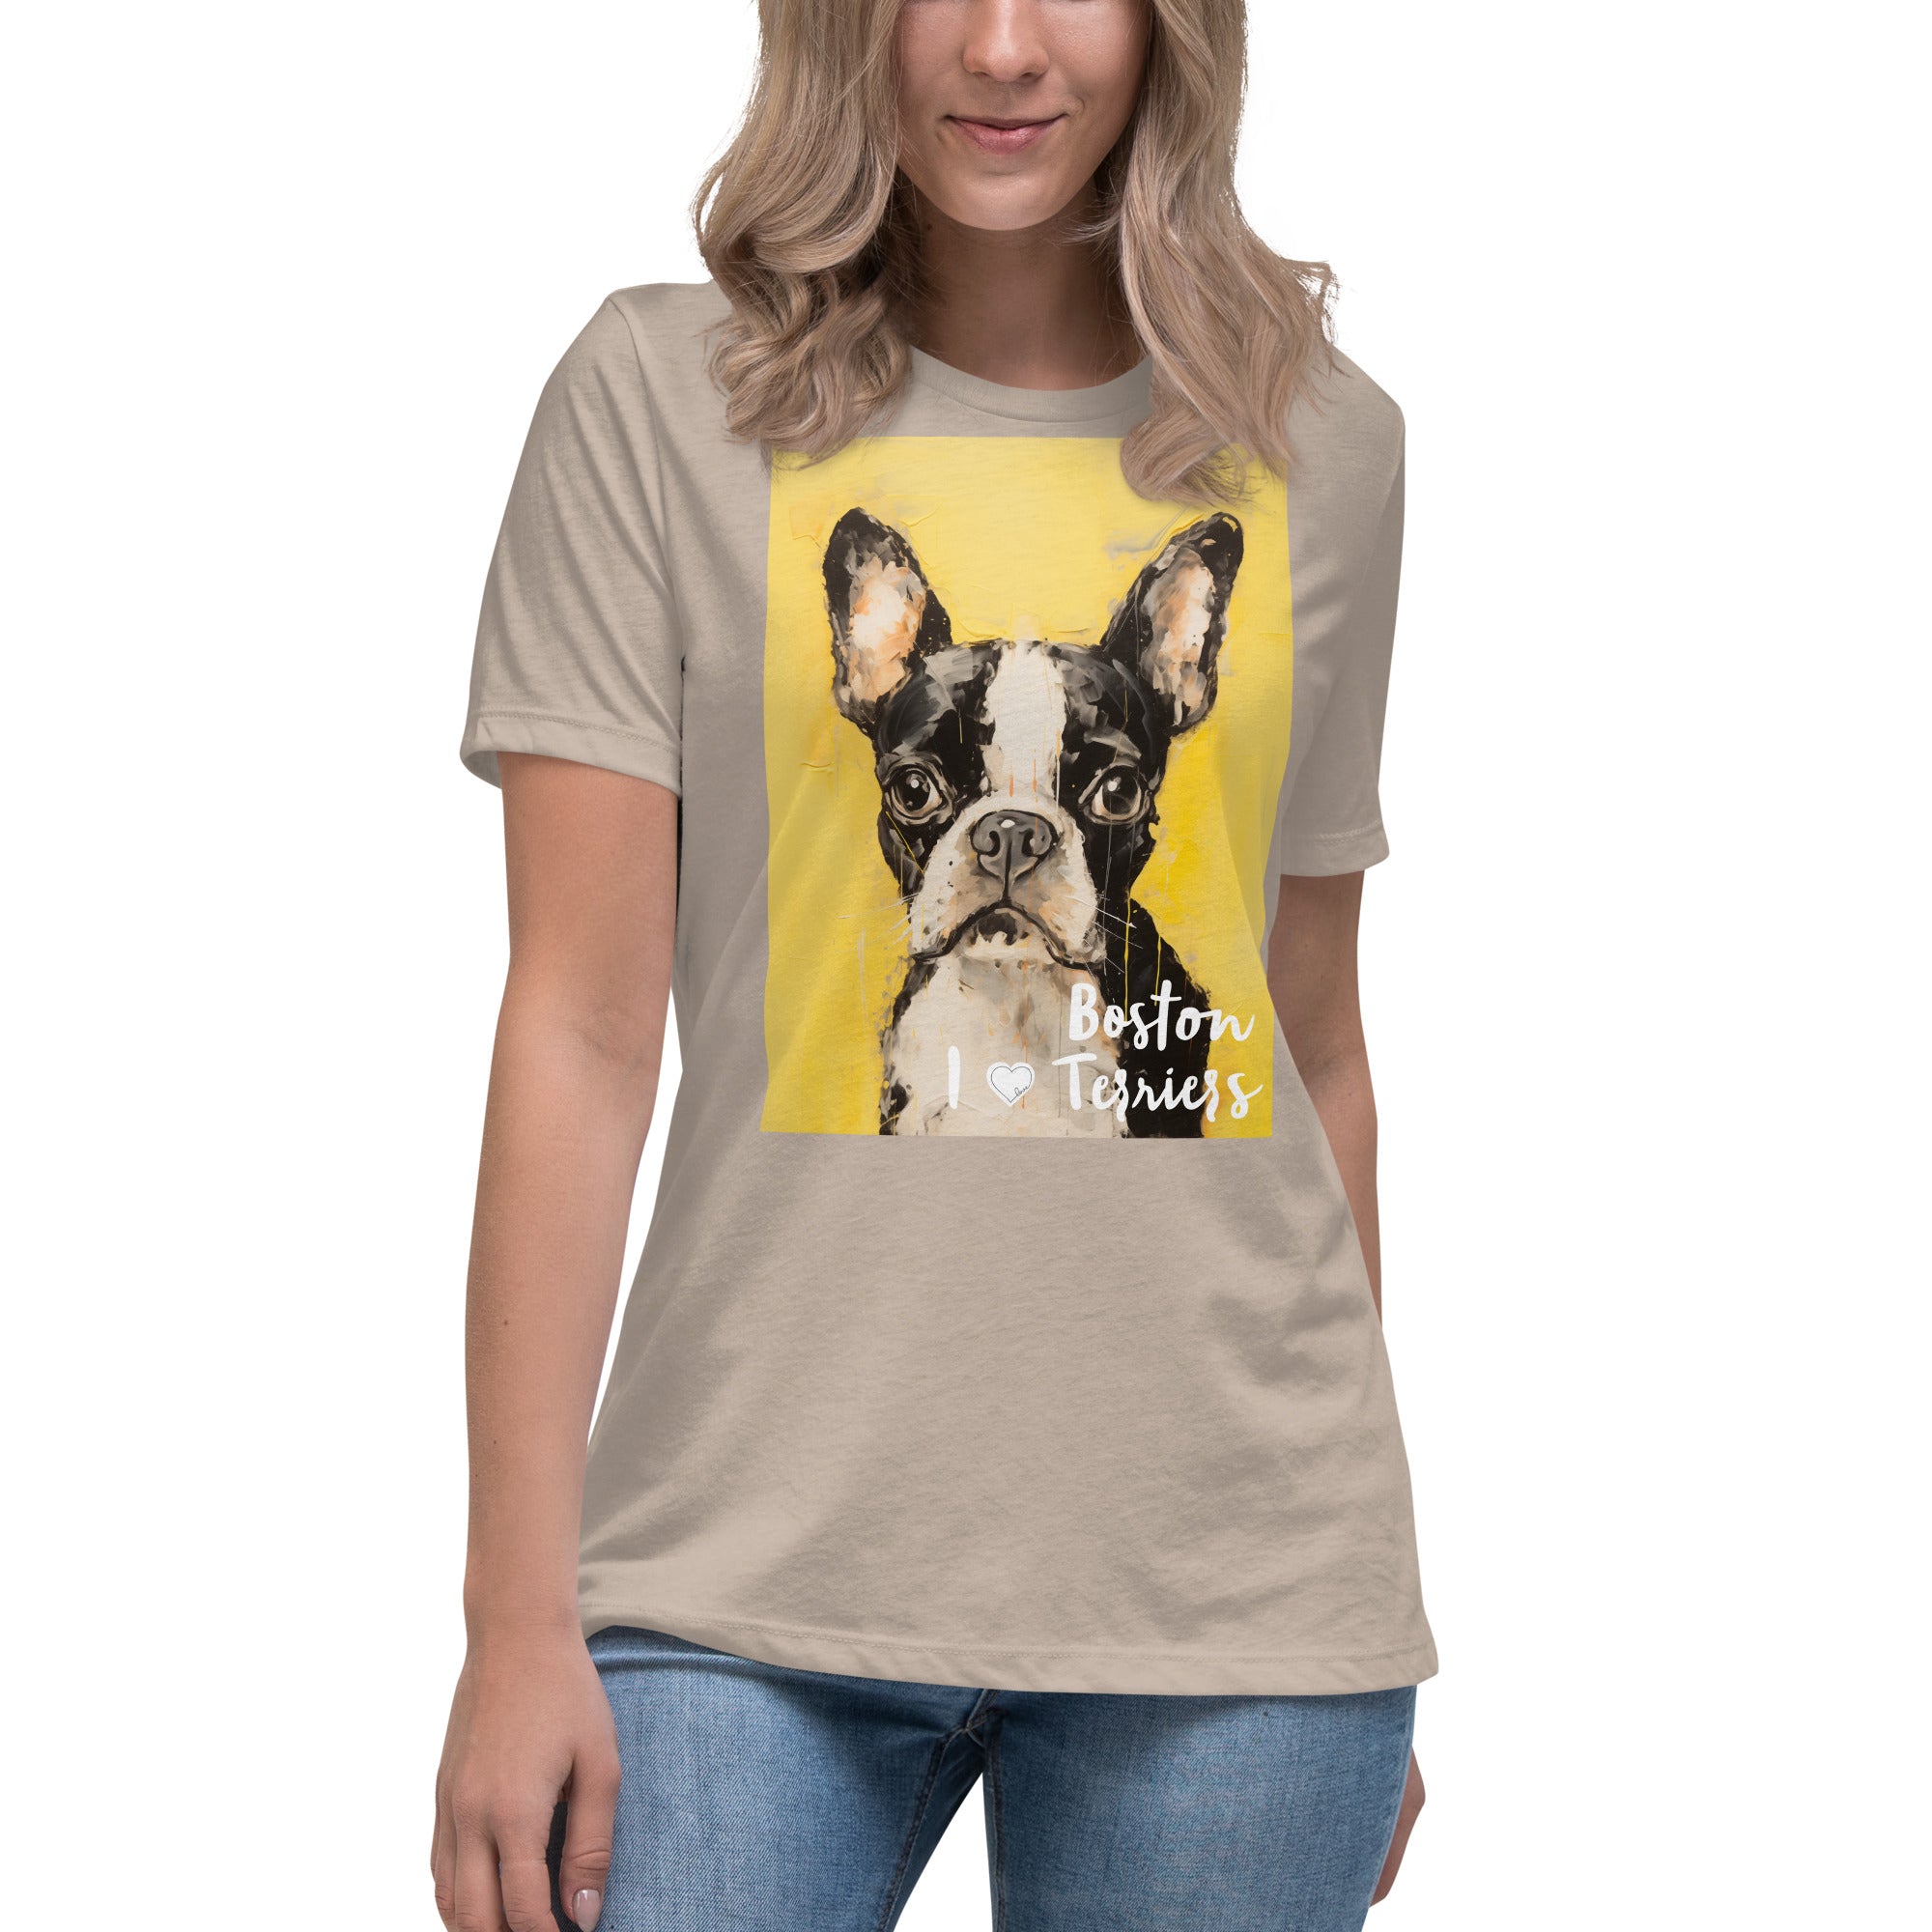 Women's Relaxed T-Shirt - I ❤ Dogs - Boston Terrier